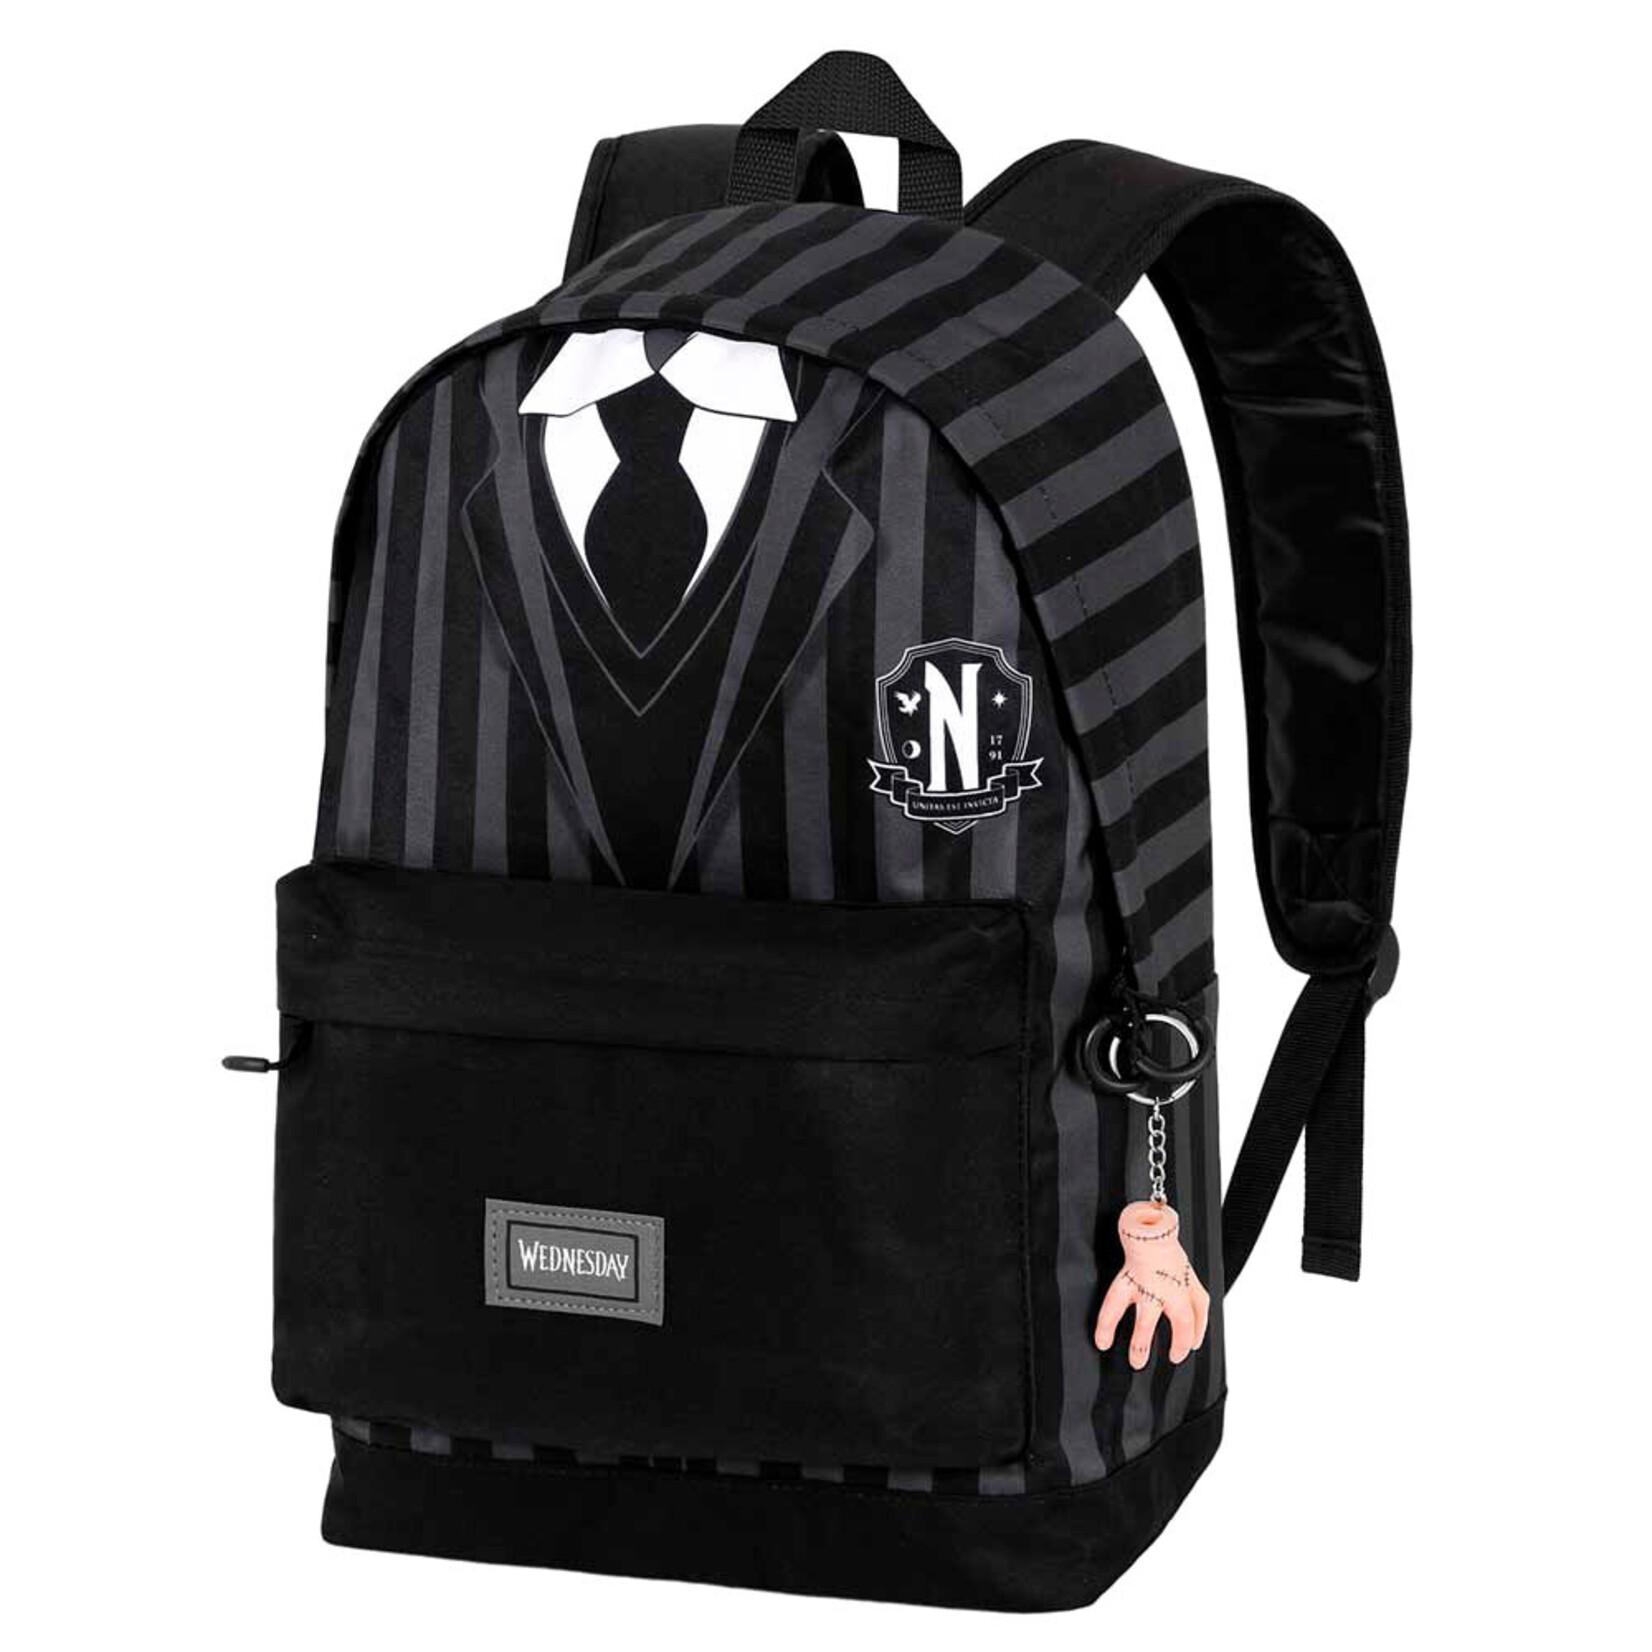 Karacter Mania Karacter Mania Wednesday Uniform Backpack 41 cm